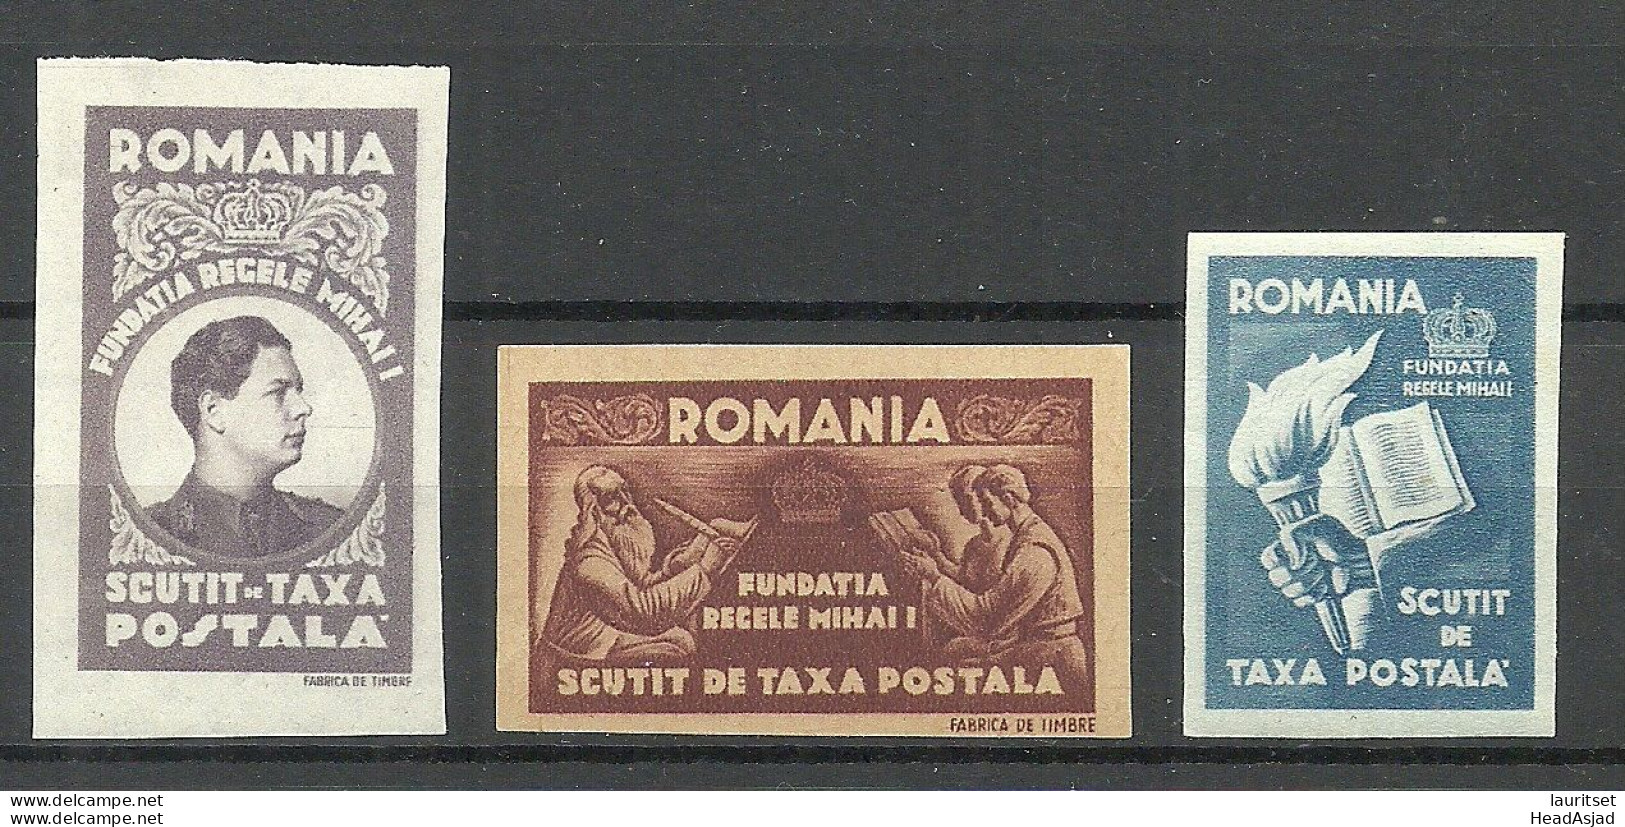 ROMANIA ROMANA 1947 Charity Wohlfahrt Spende Für König Michael Stiftung Michel XXII A B - XII C B MNH - Unused Stamps